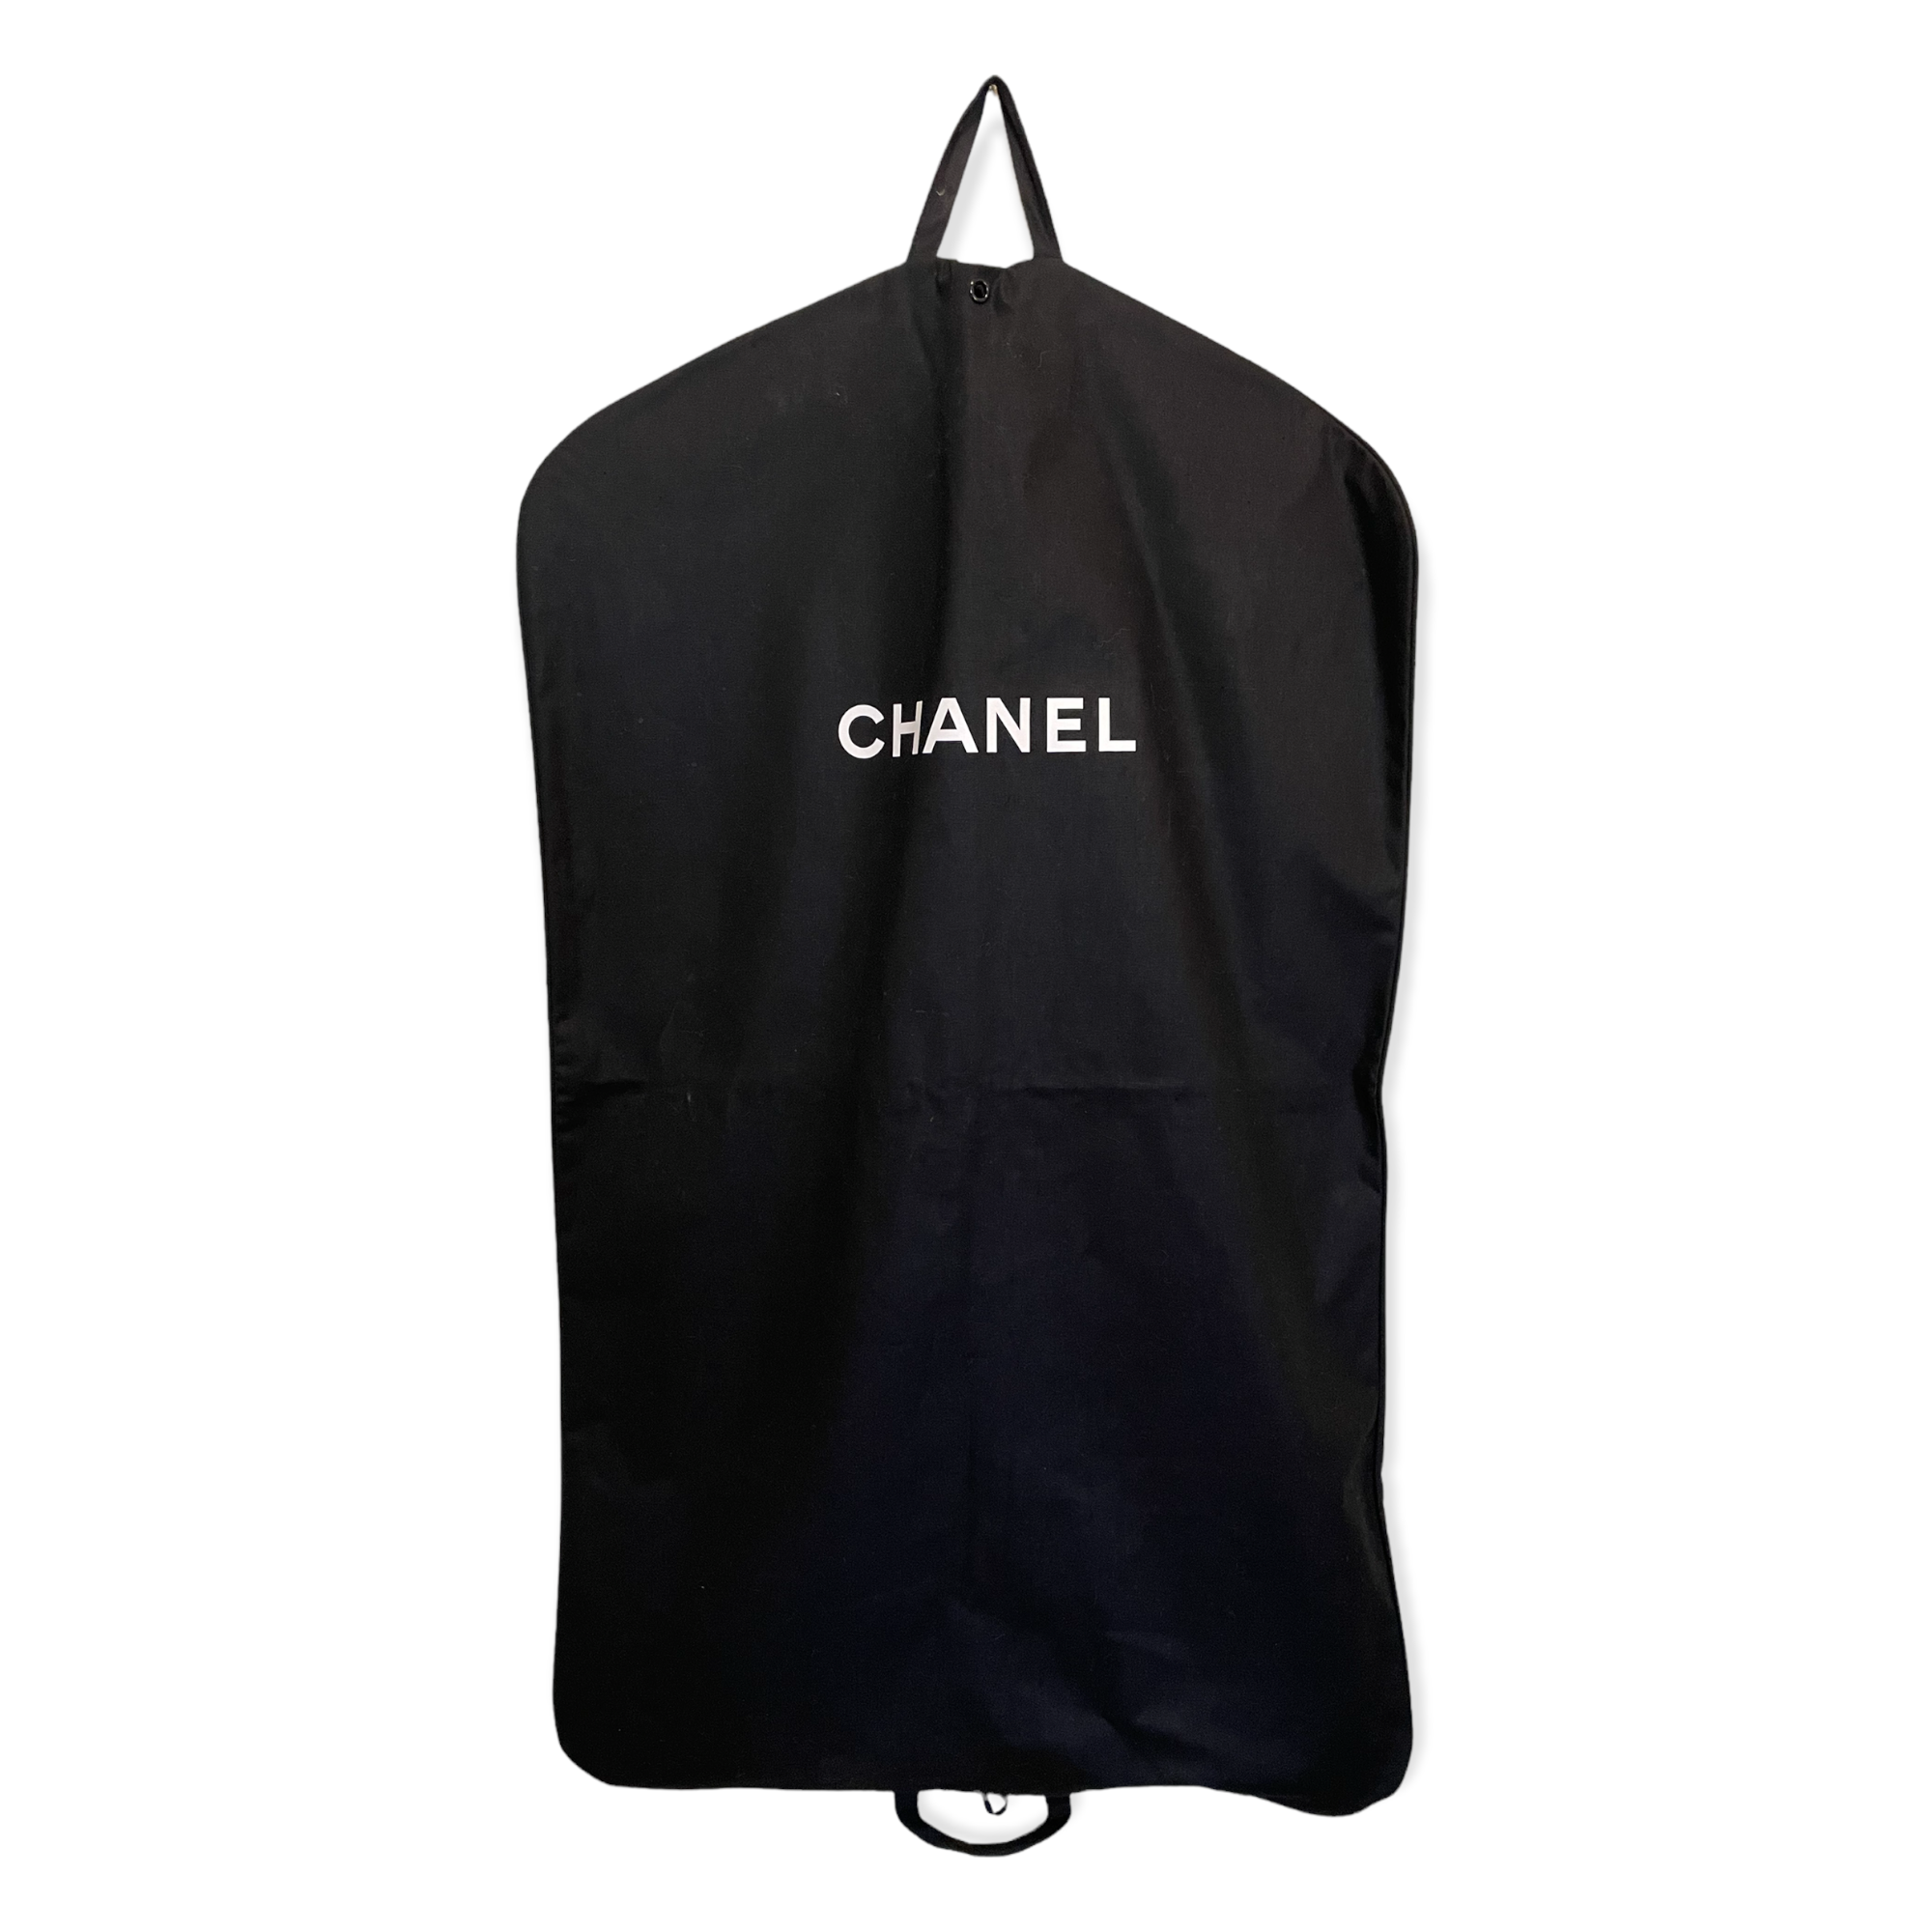 CHANEL Garment Bag